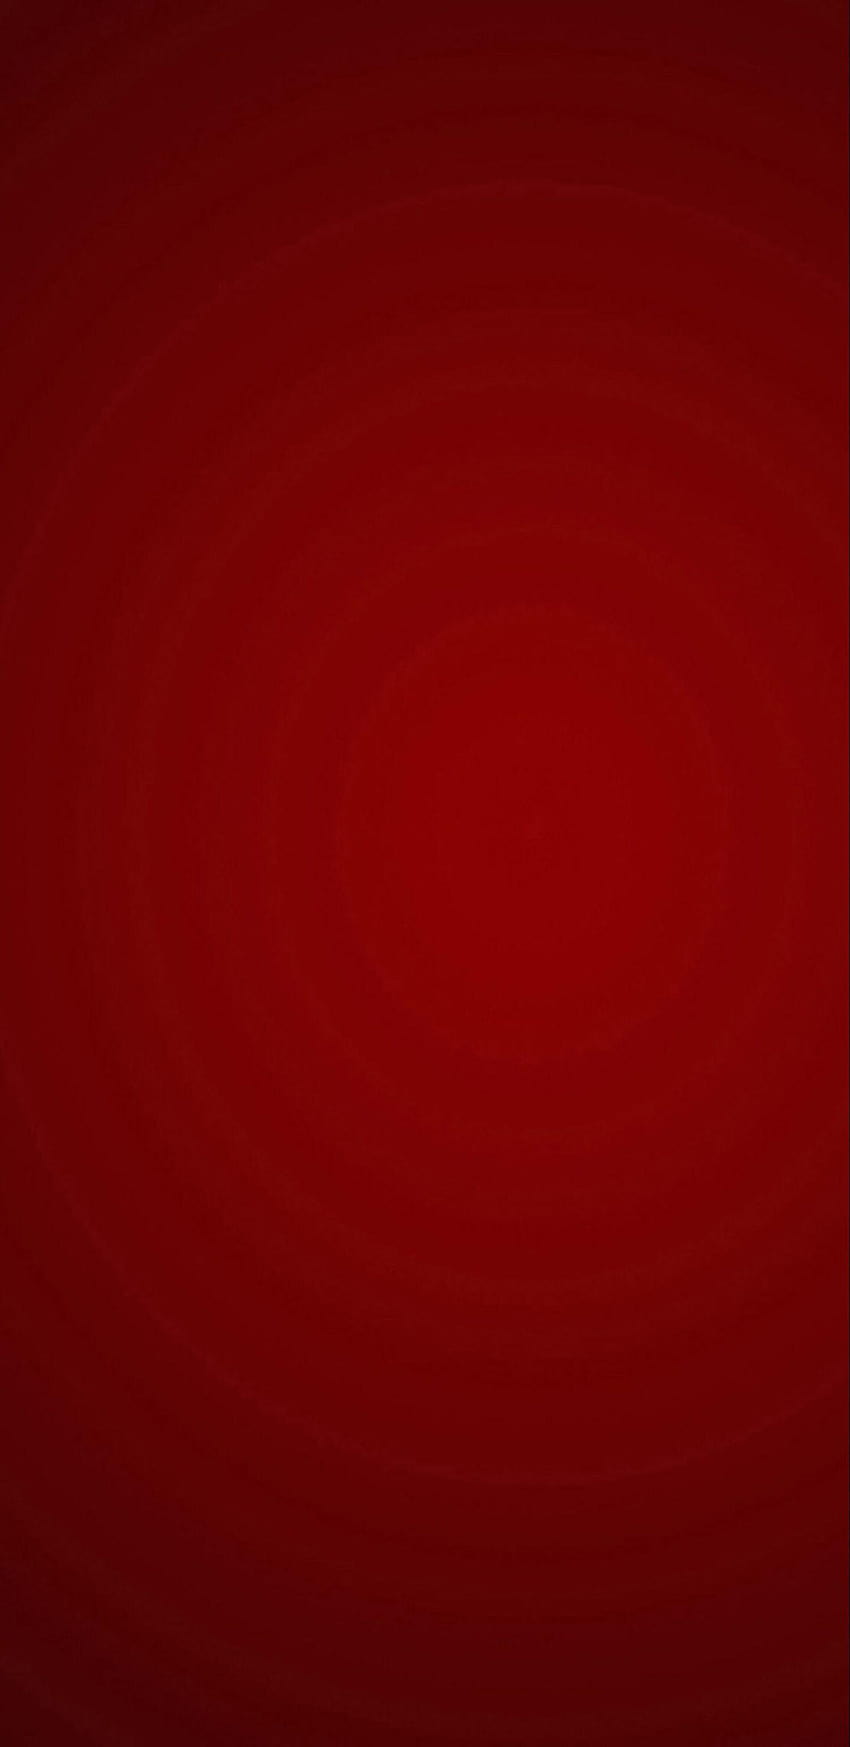 Merah, bersih, latar belakang, warna, galaksi, s8, dinding, warna merah marun wallpaper ponsel HD